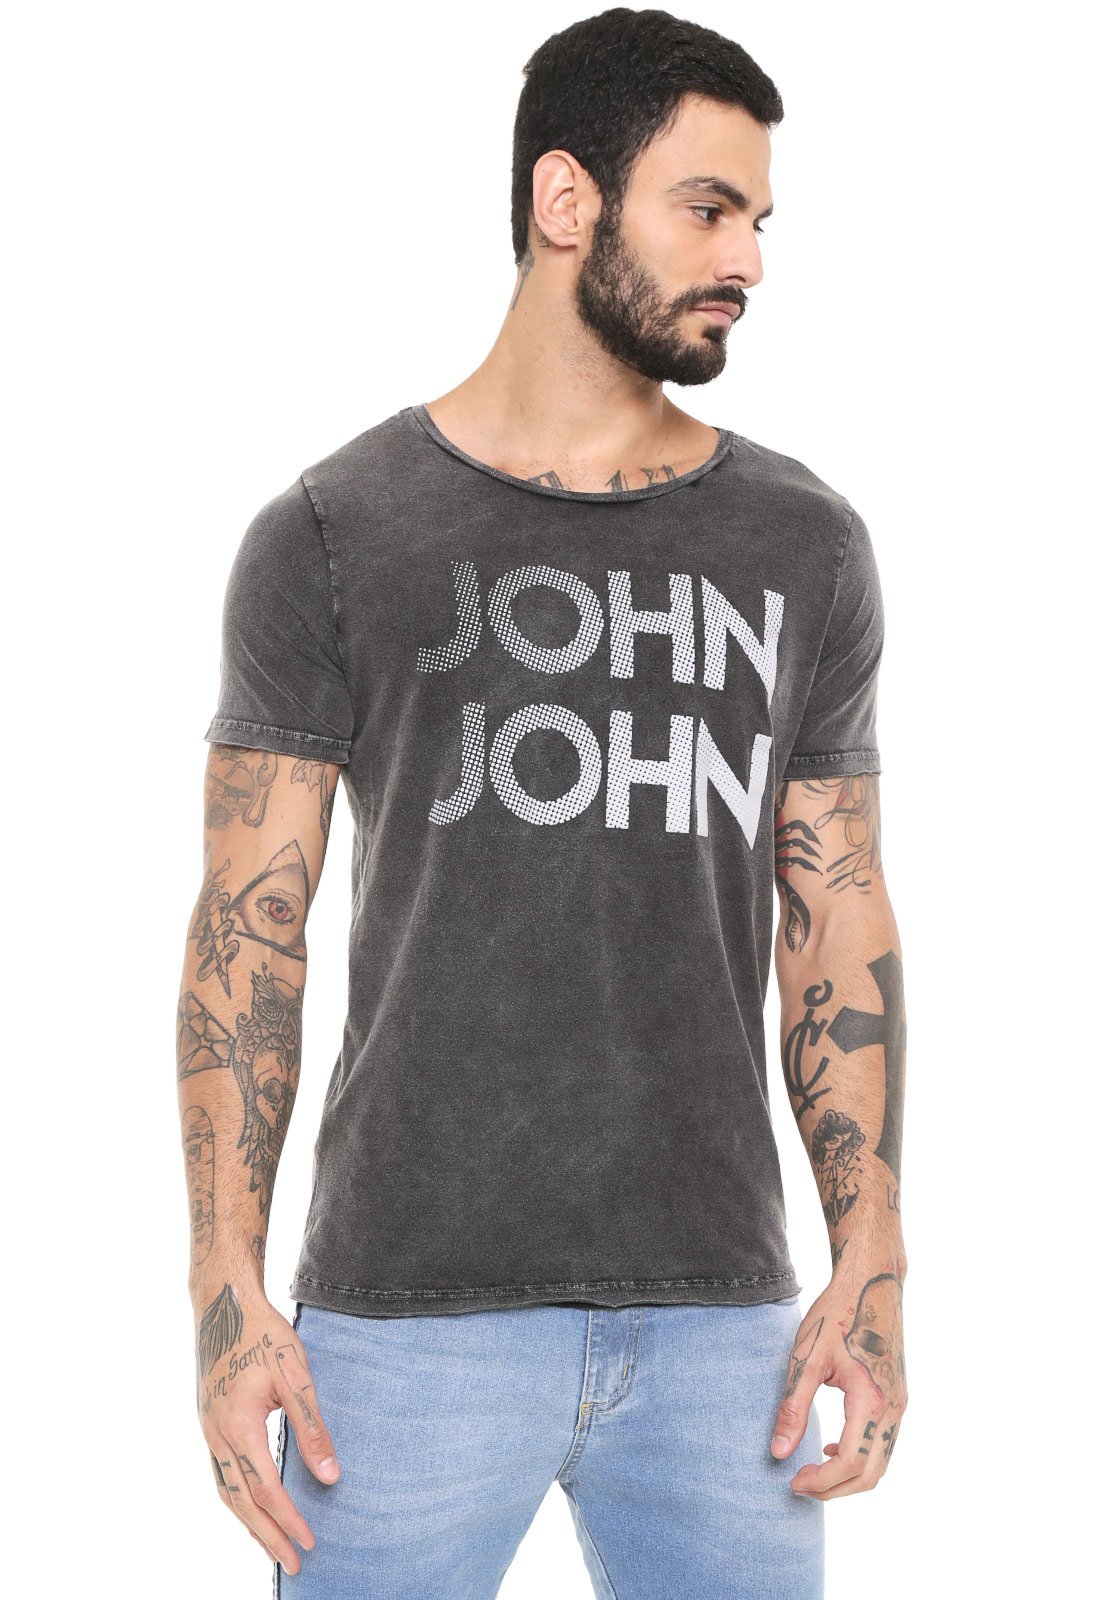 Camiseta John John RG Alexis - Masculina